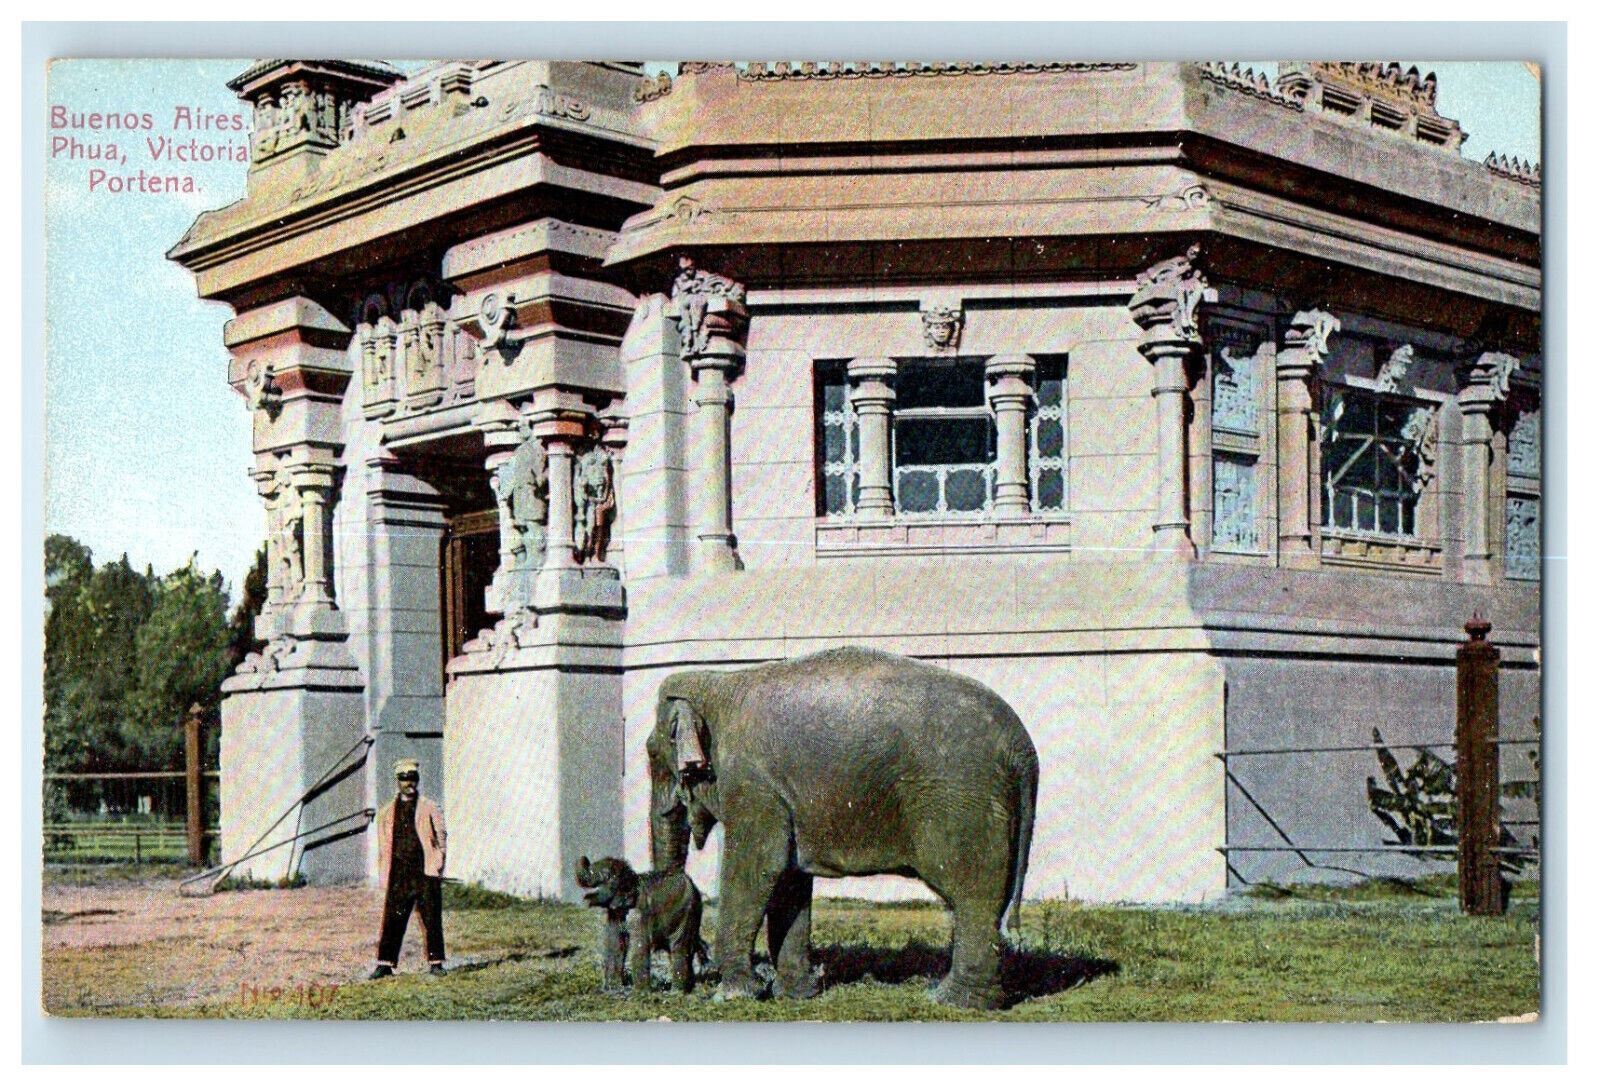 c1910s Elephant Scene Buenos Aires Phua Victoria Portena Argentina Postcard